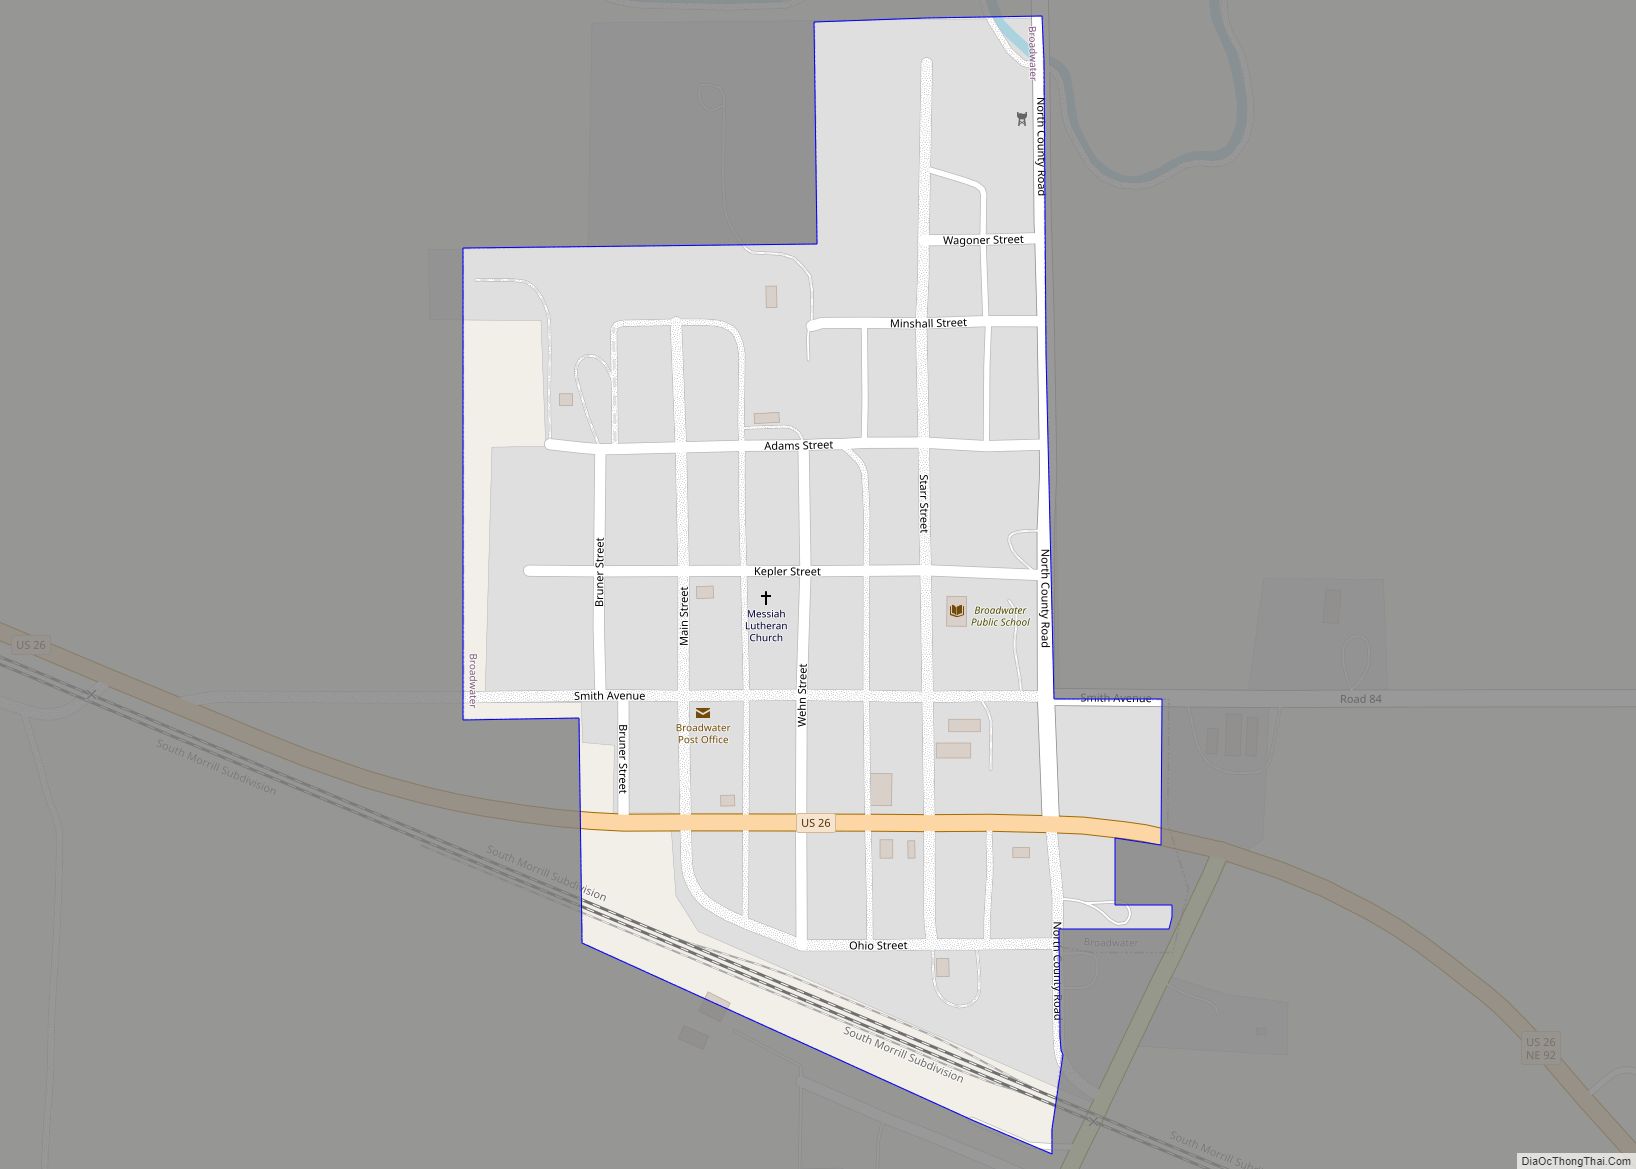 Map of Broadwater village